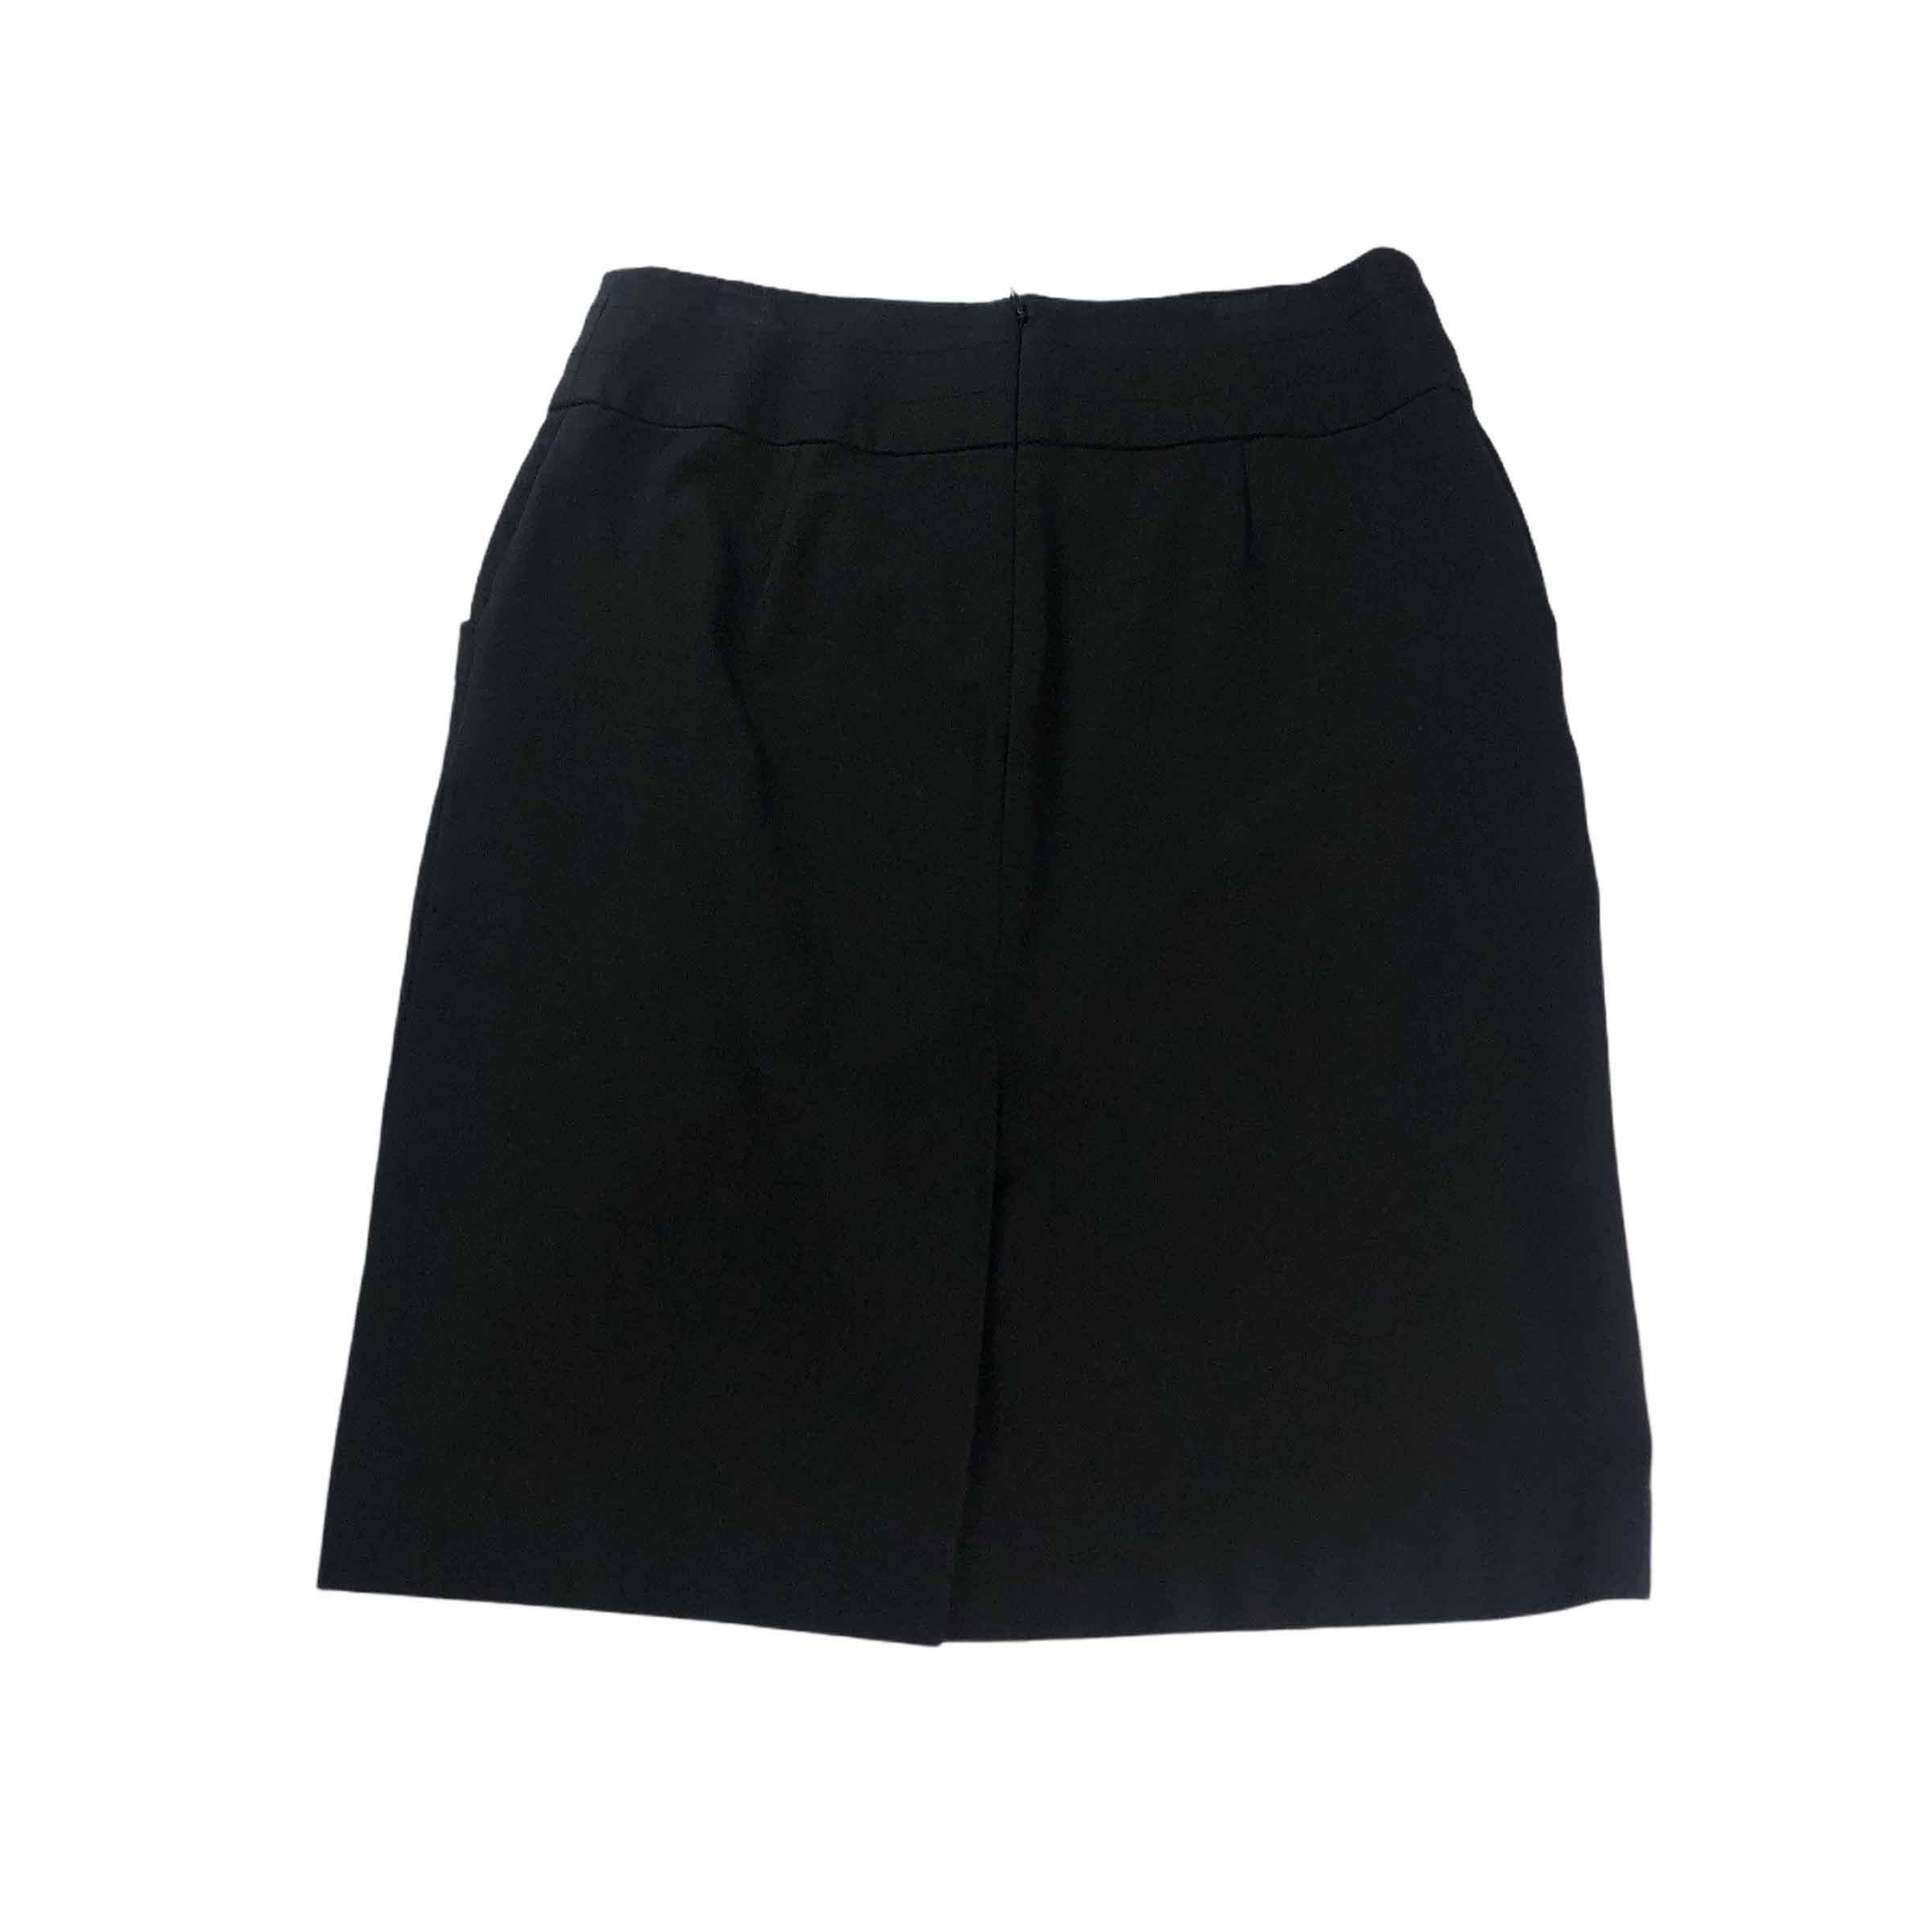 [Banana Republic] Mid-length Skirt - Size 4